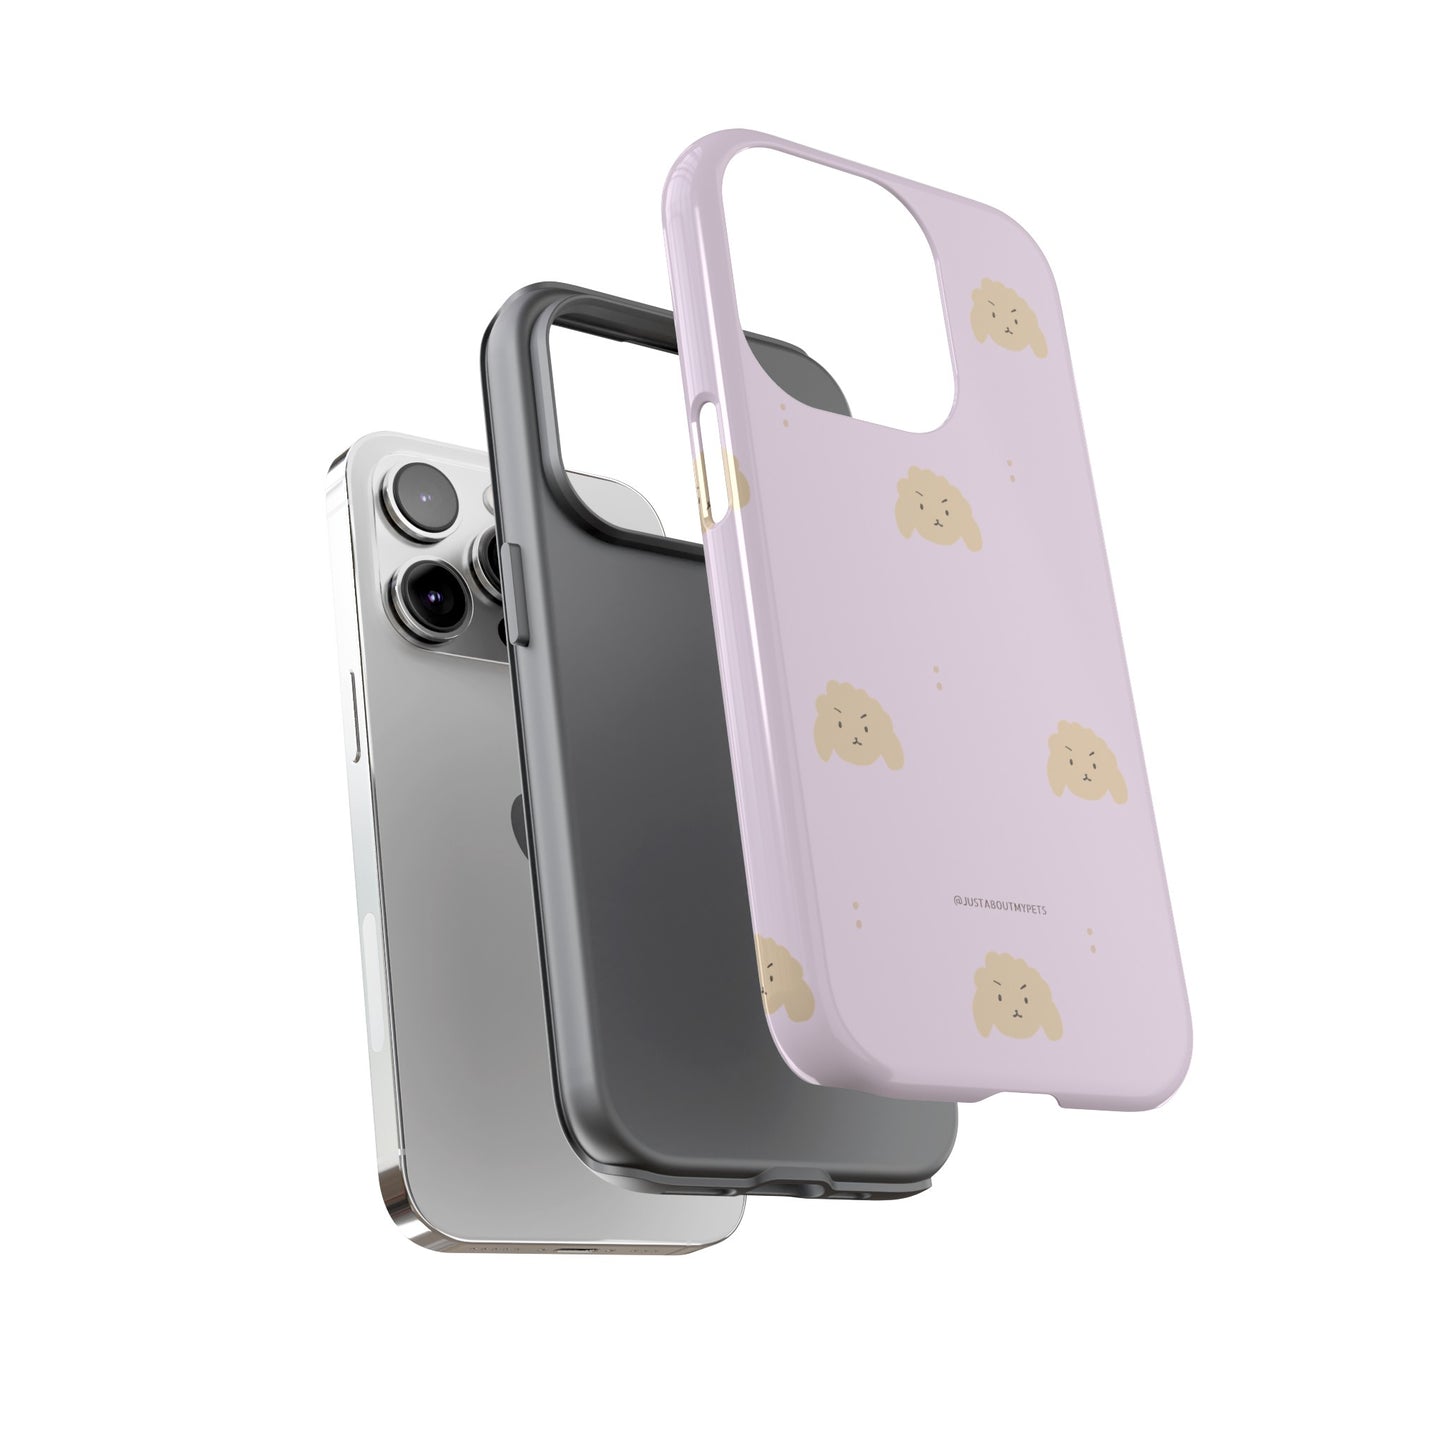 Delightful Lavender Poodle iPhone Case